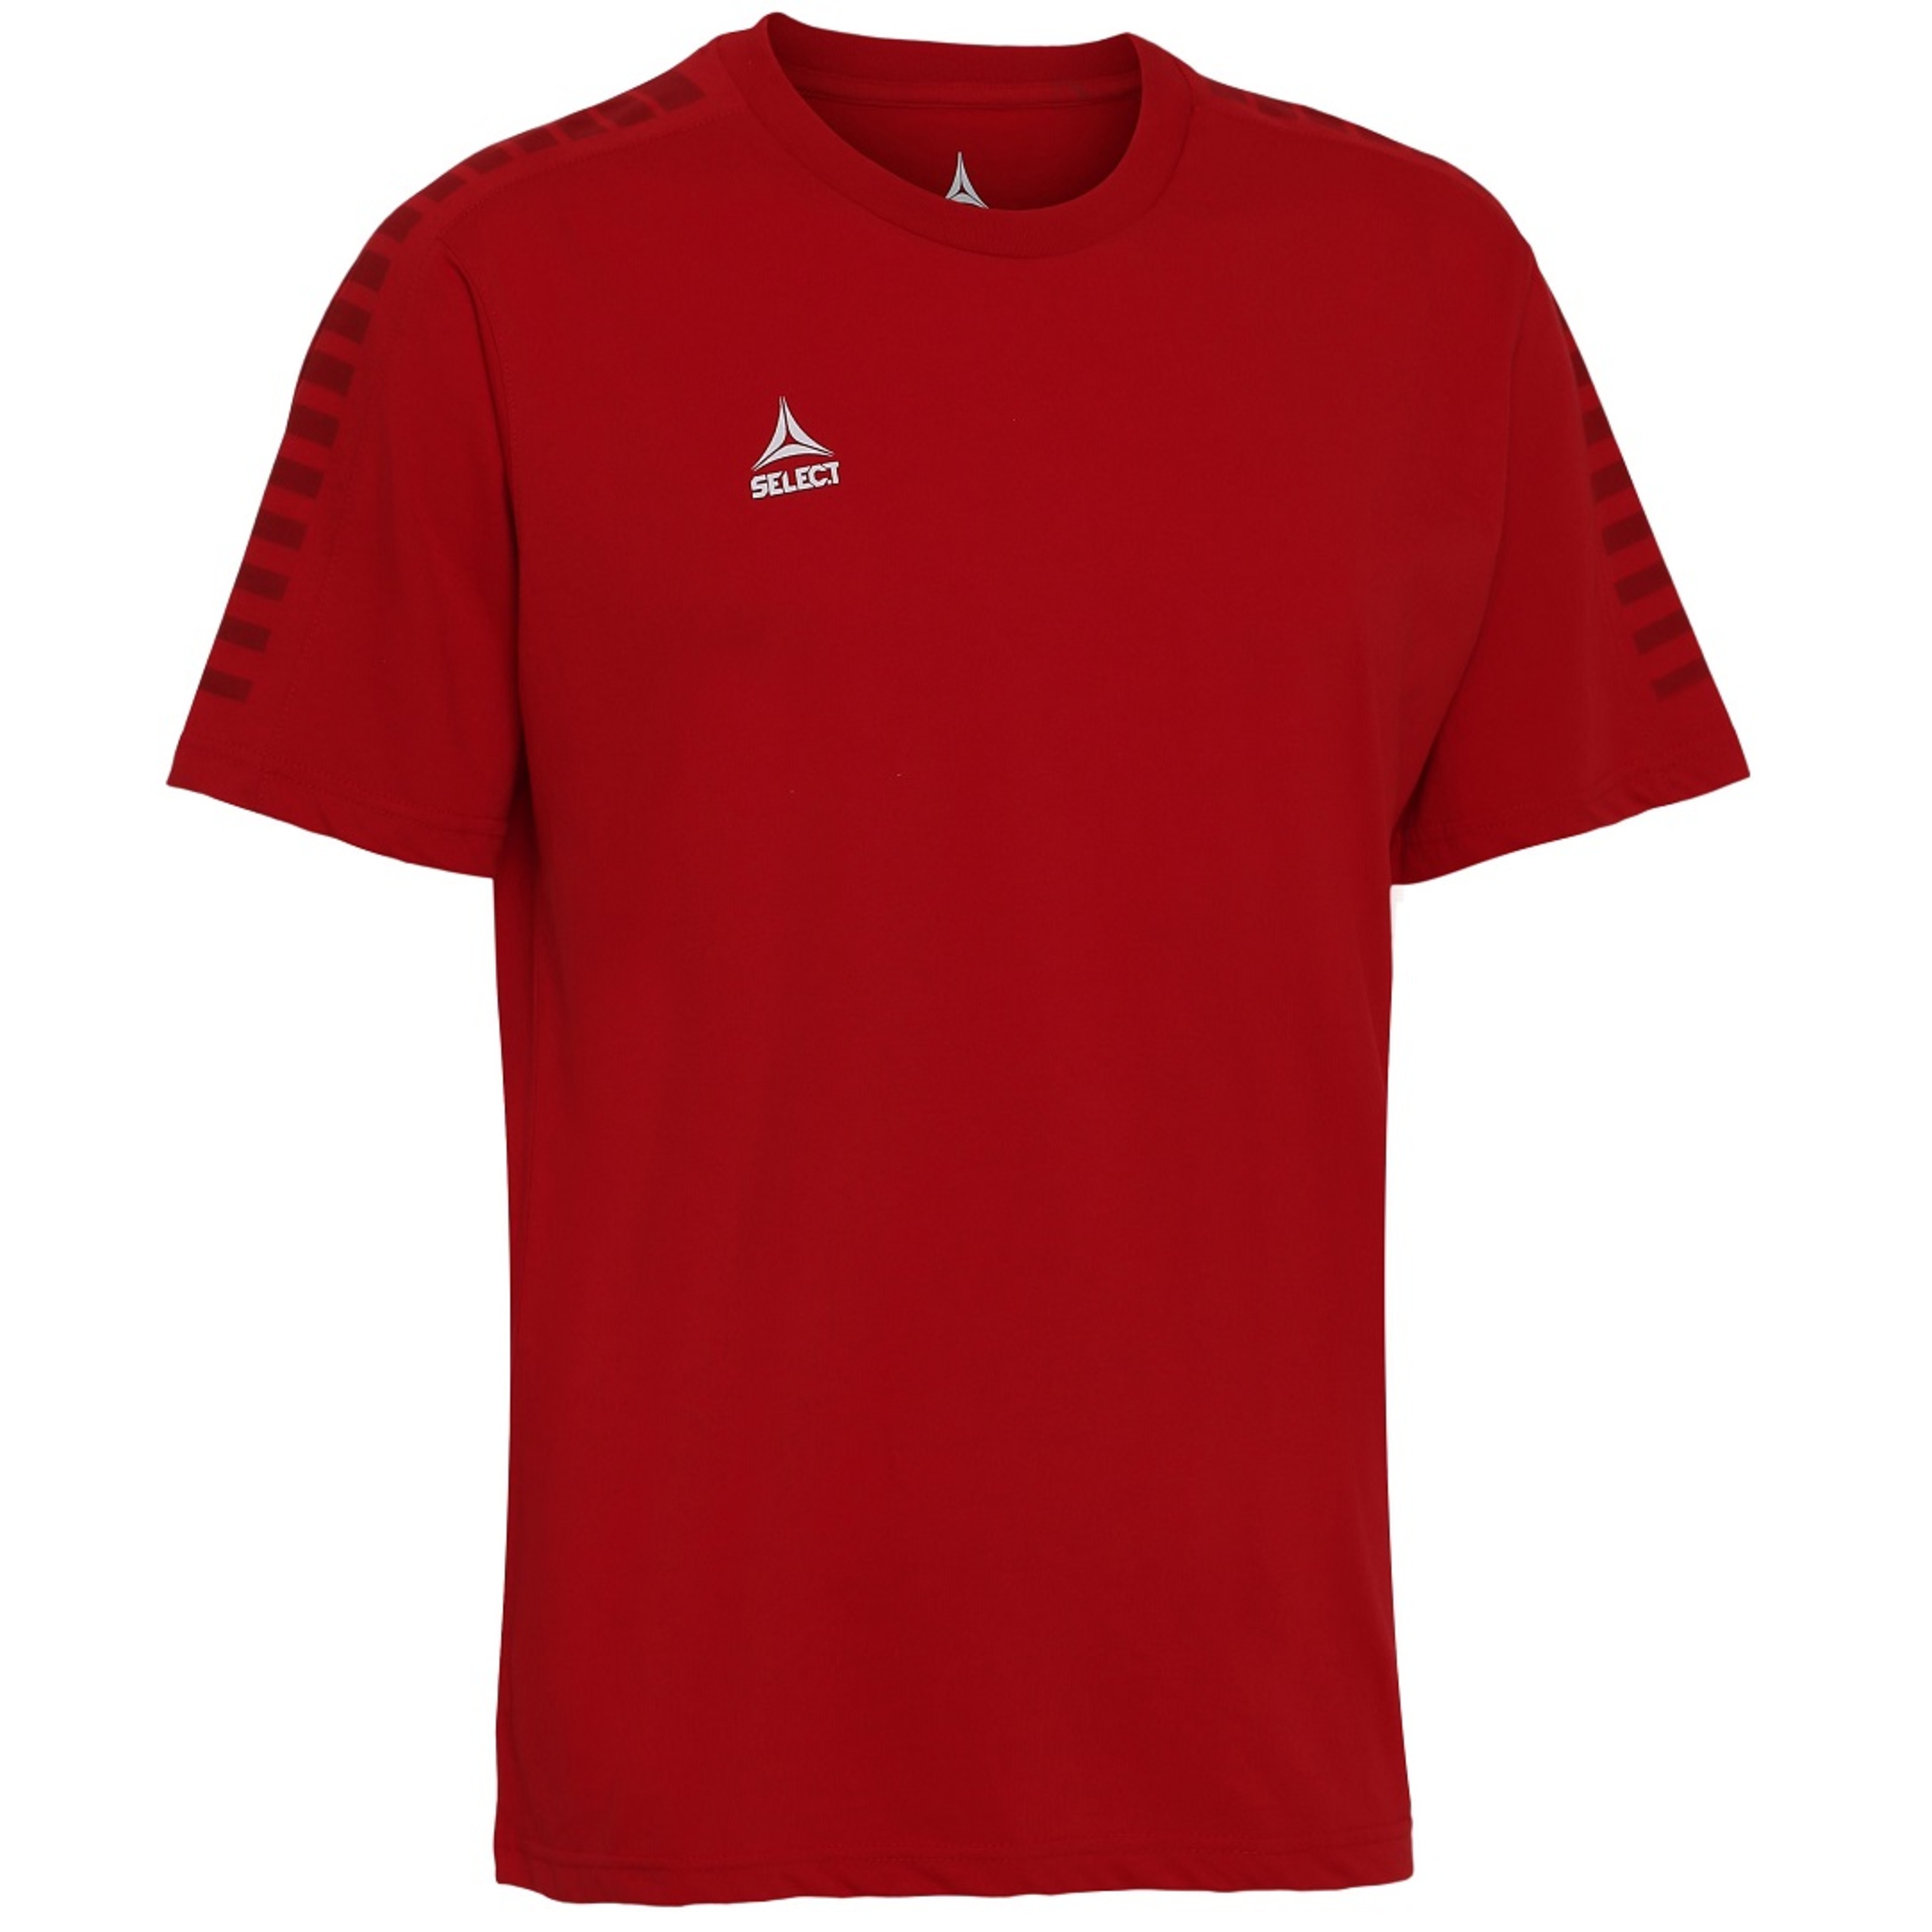 Camiseta Select Torino - rojo - 